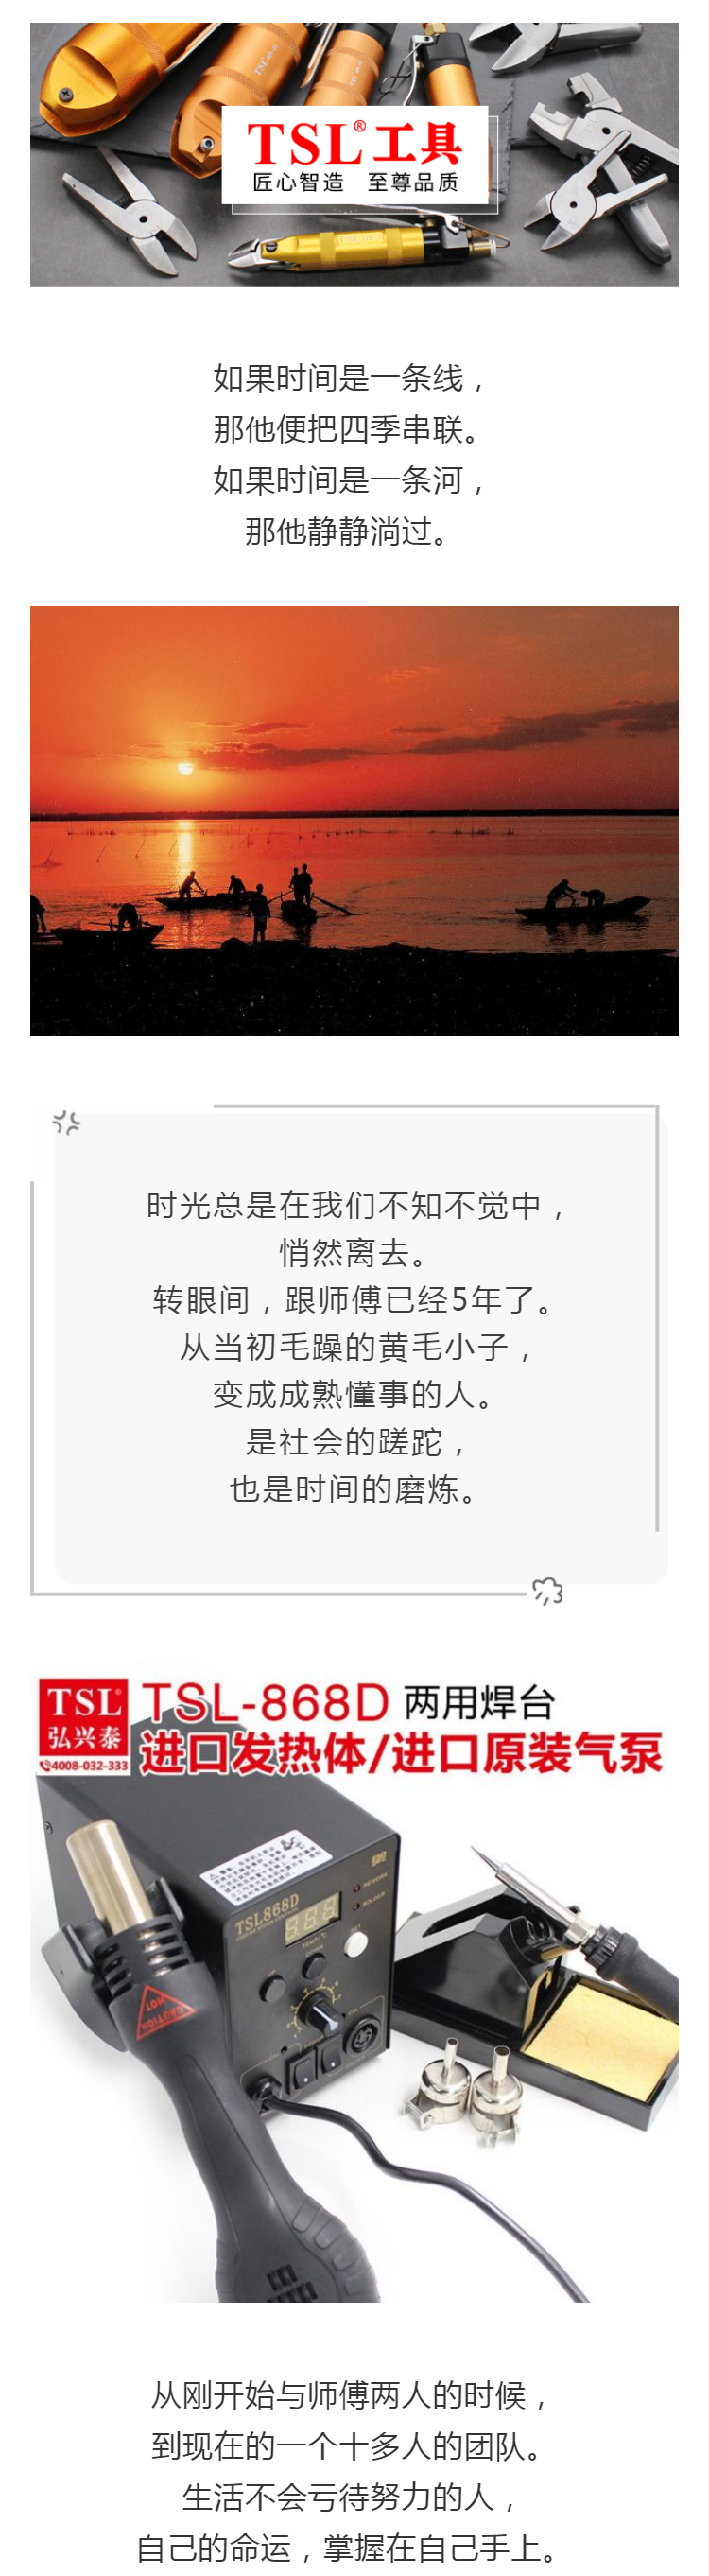 20200509_1700_yiban_screenshot (1).png